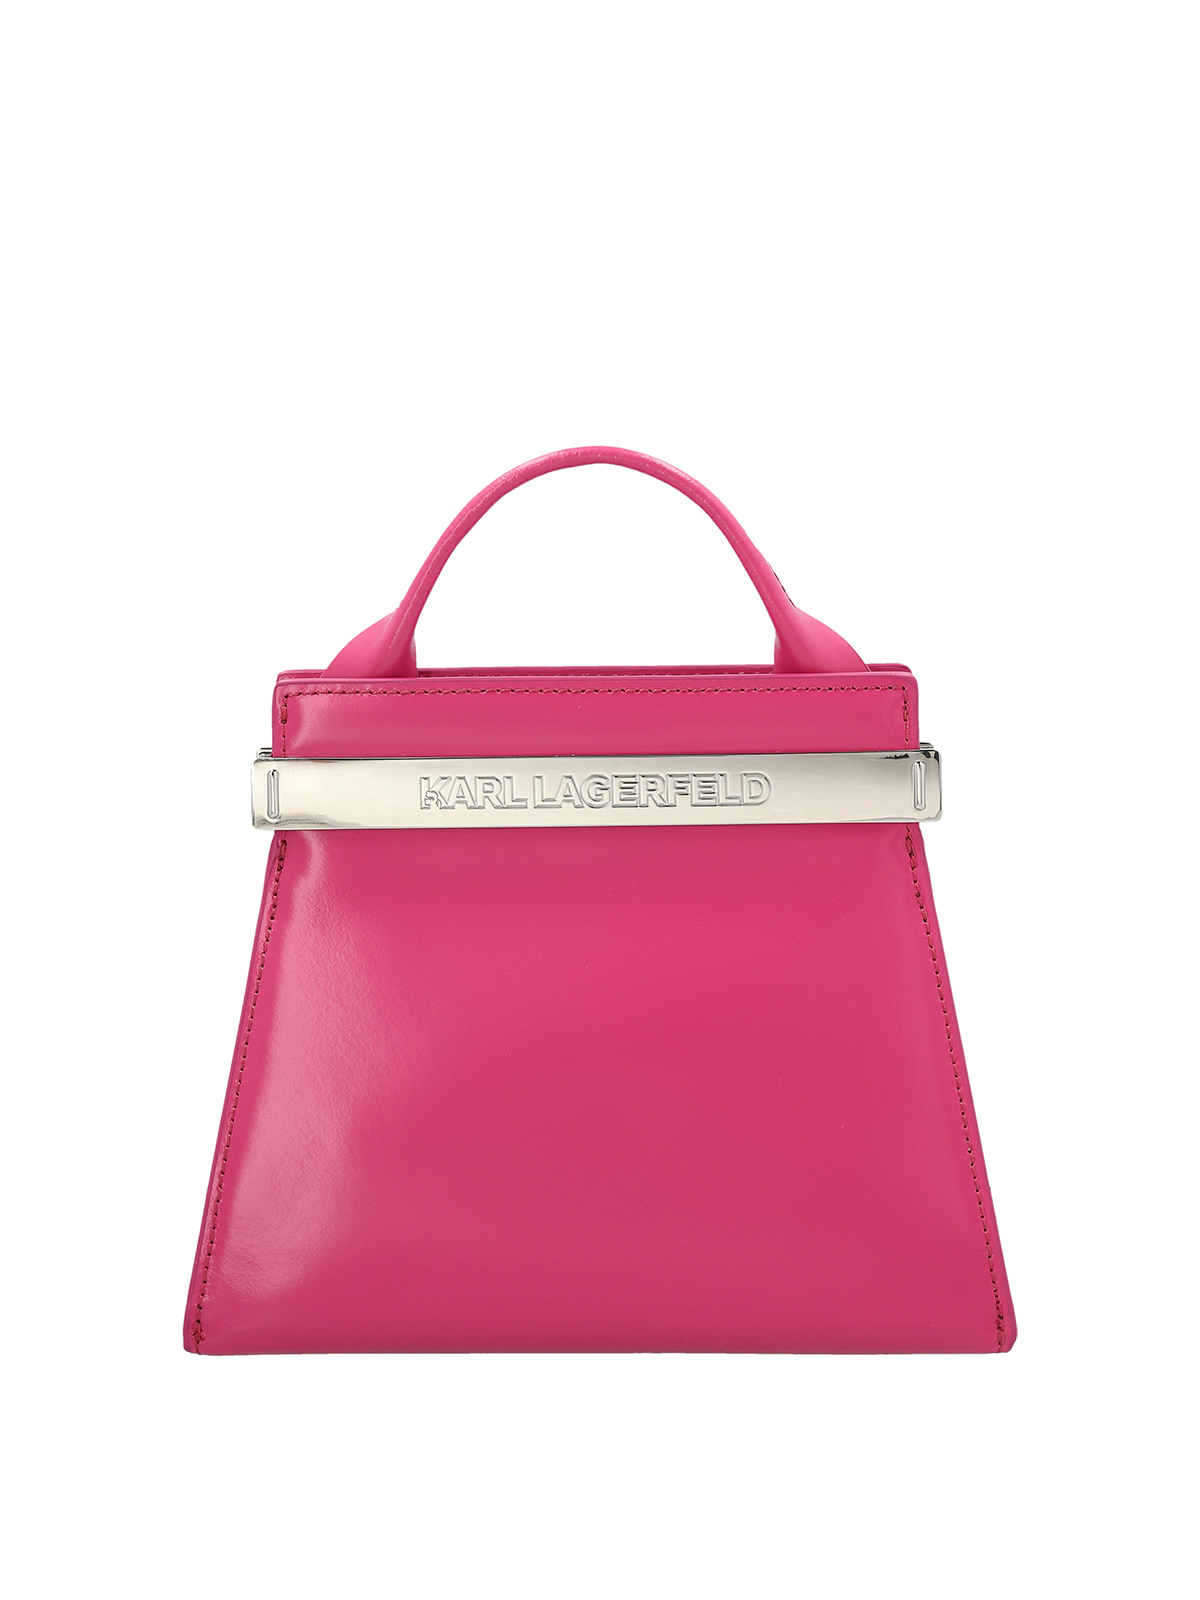 Totes bags Karl Lagerfeld - K Crocss small handbag - 226W3047512